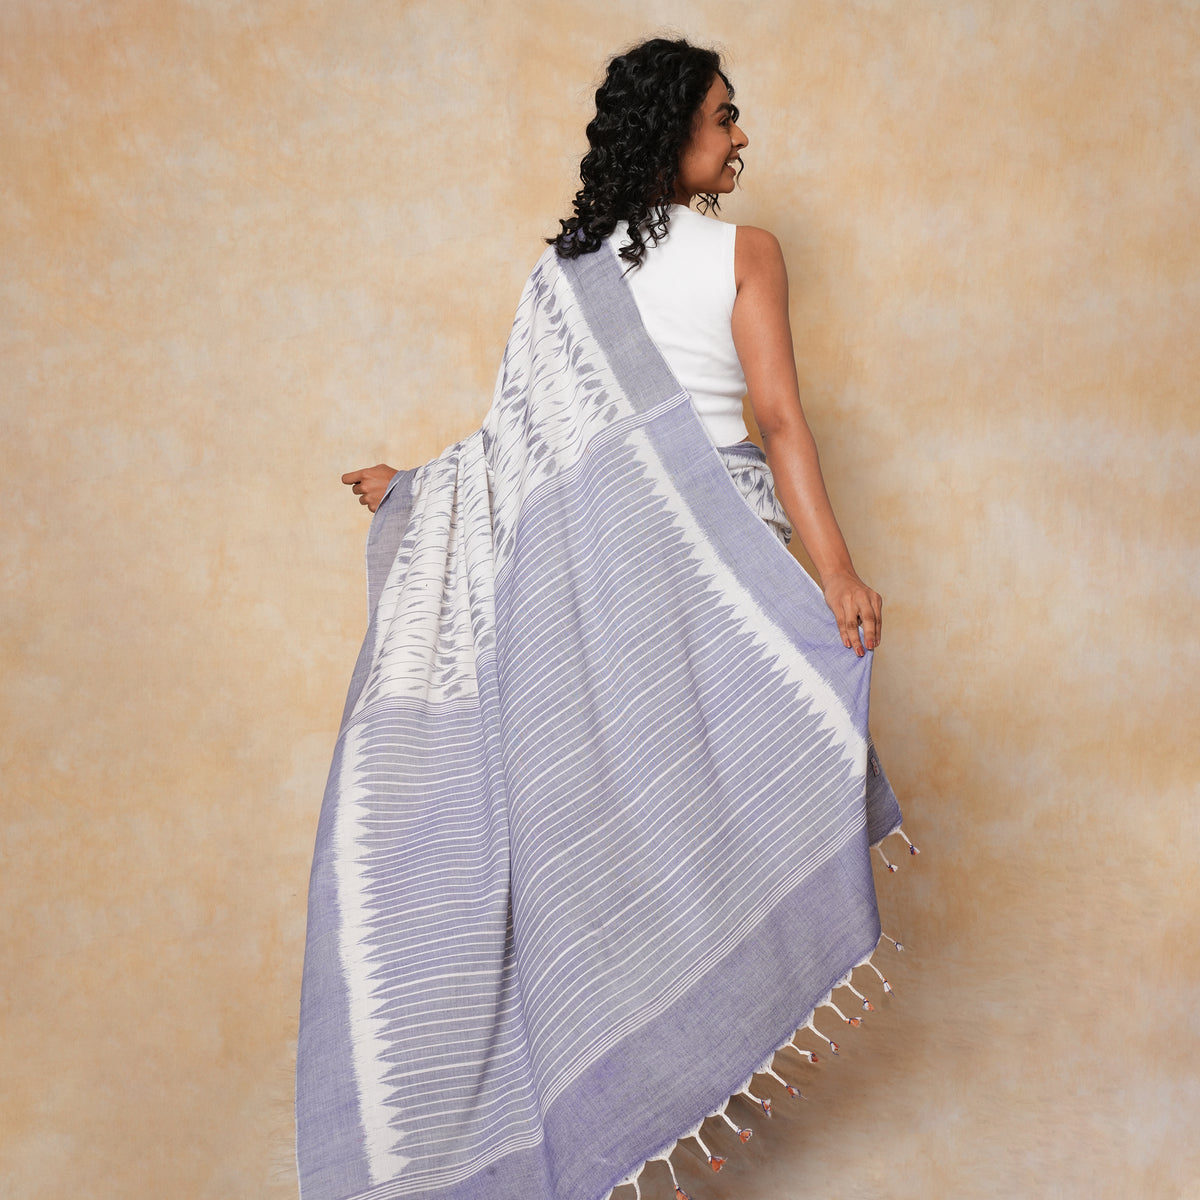 DISHA Handloom Cotton Saree - White and Blue